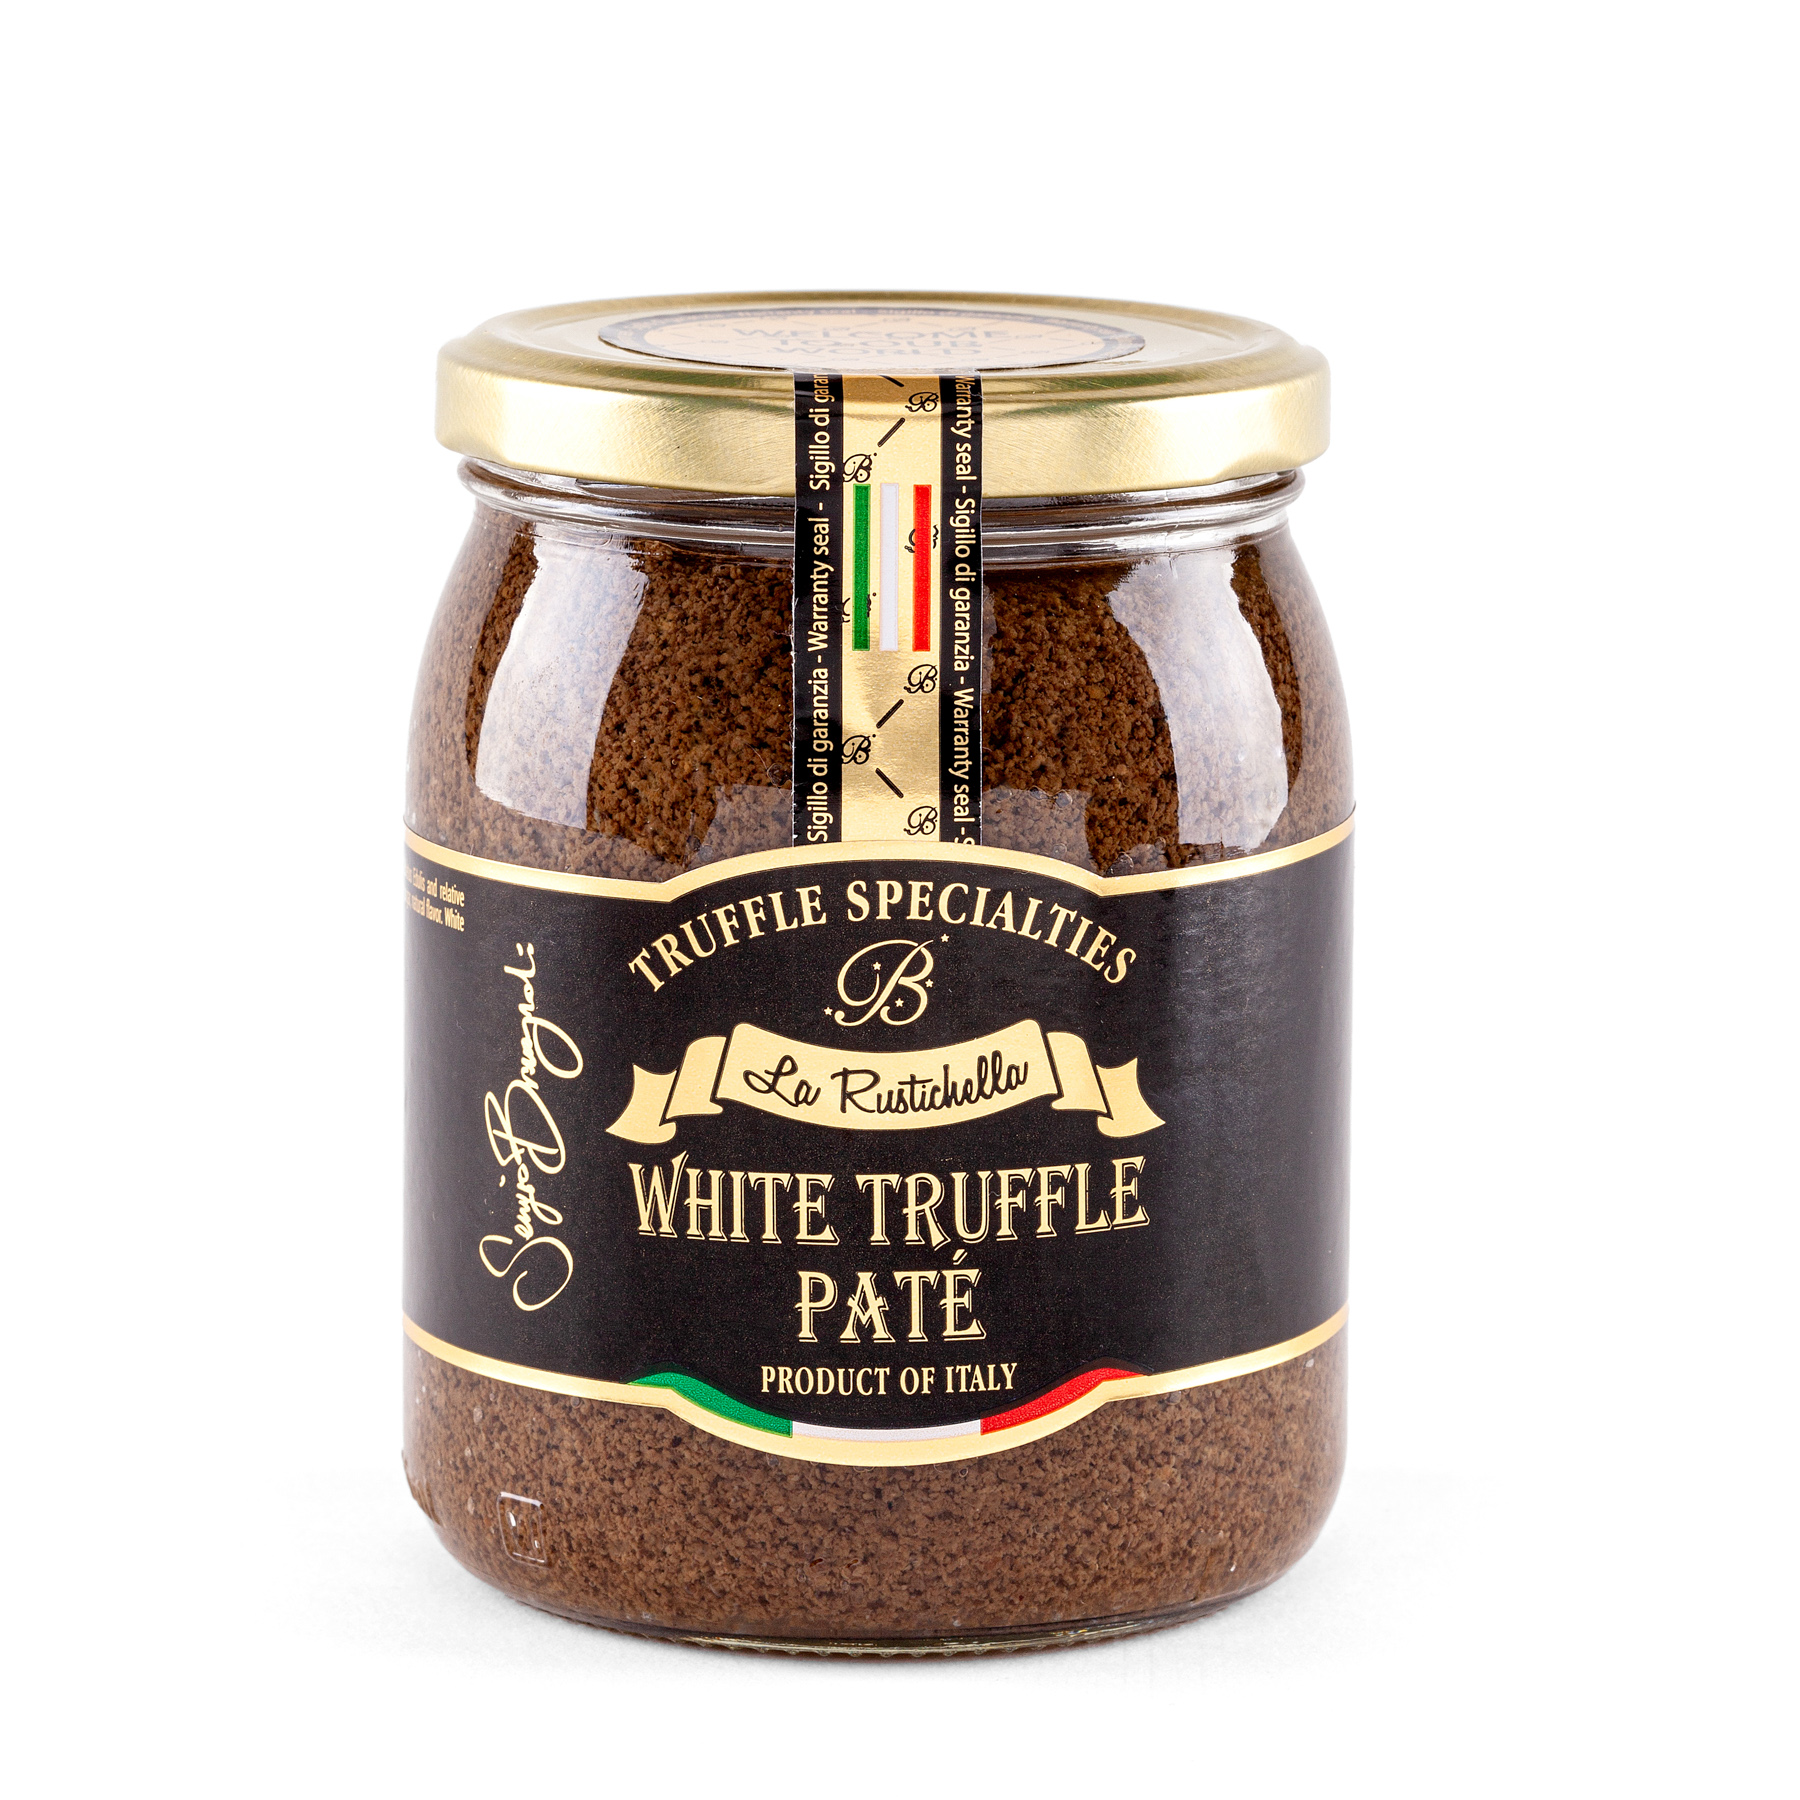 White Truffle Pate